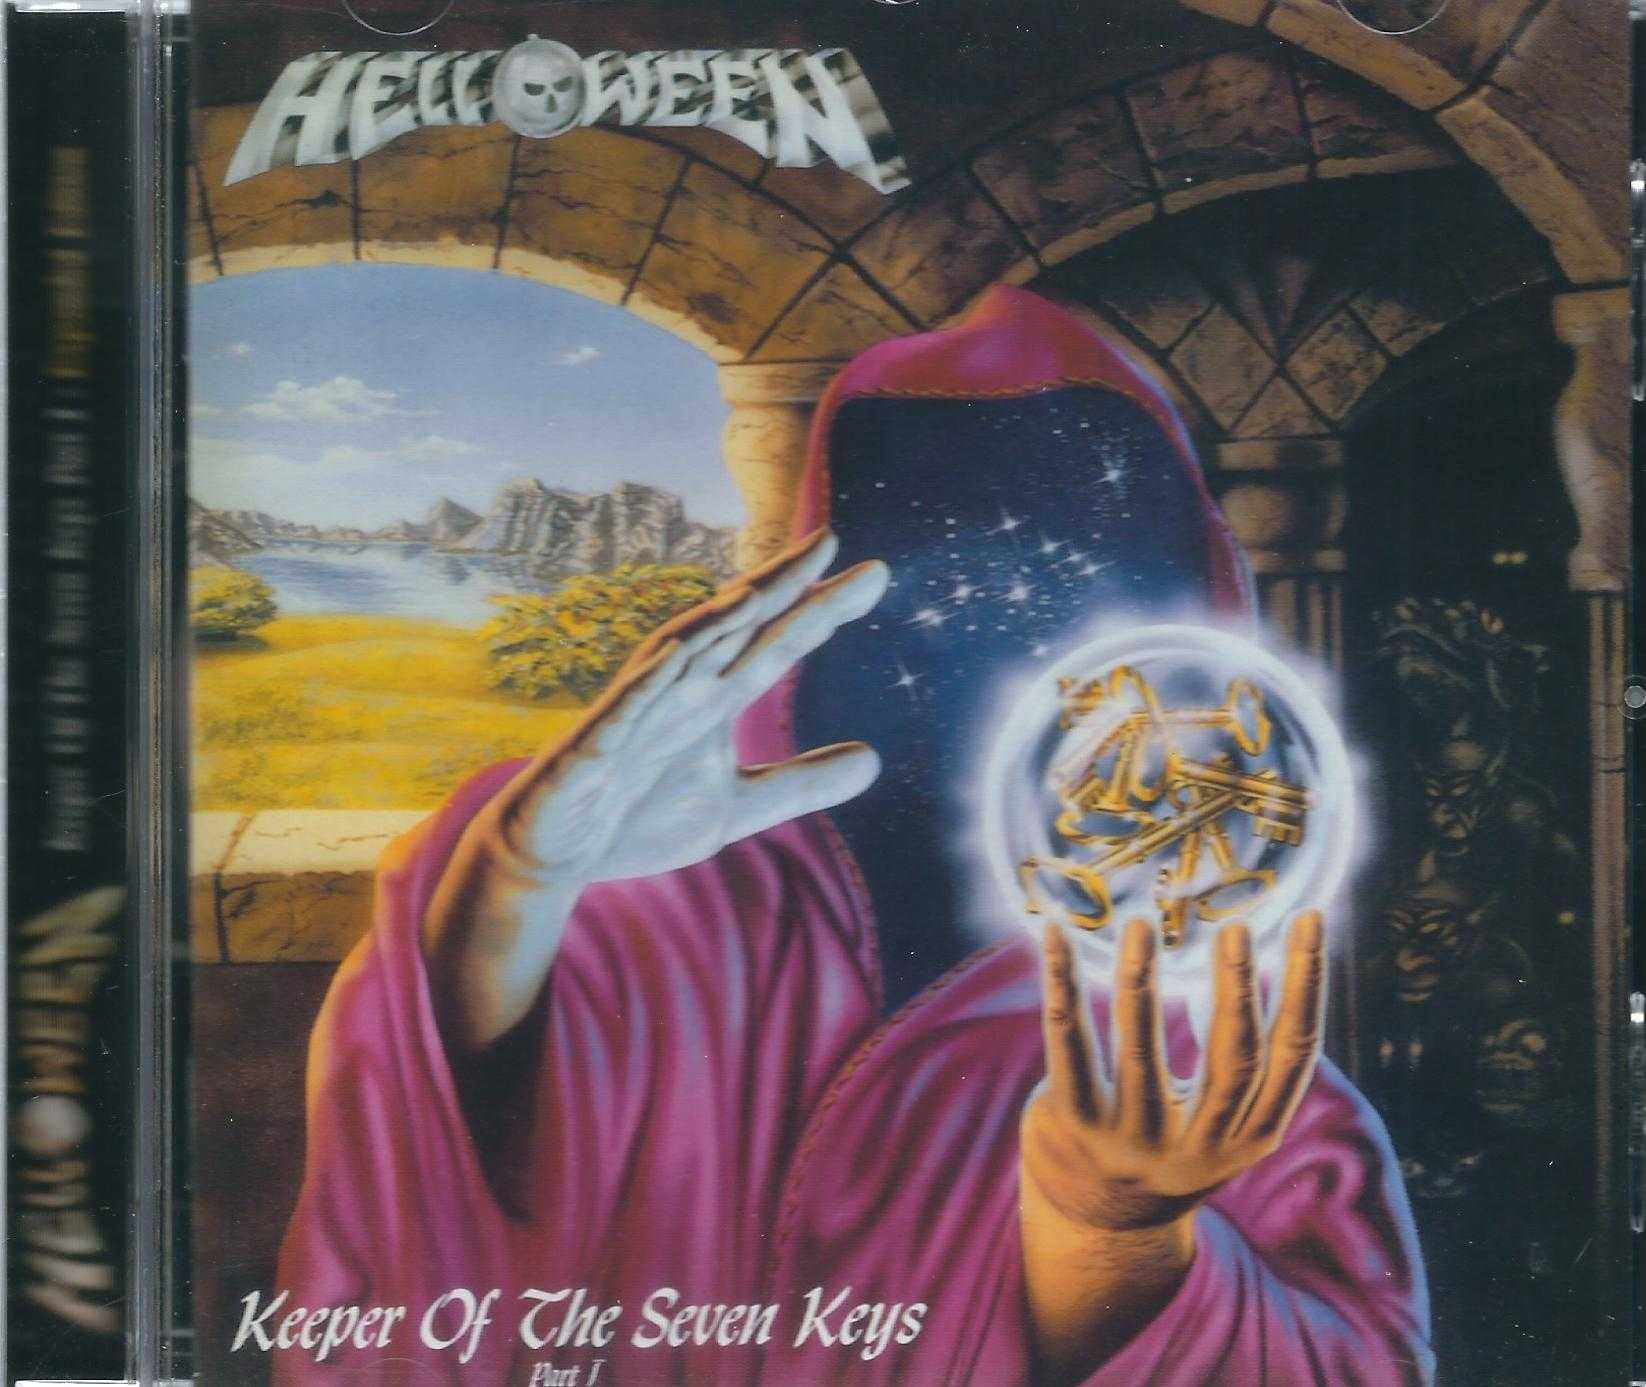 CD Helloween – Keeper Of The Seven Keys Part I (2006)